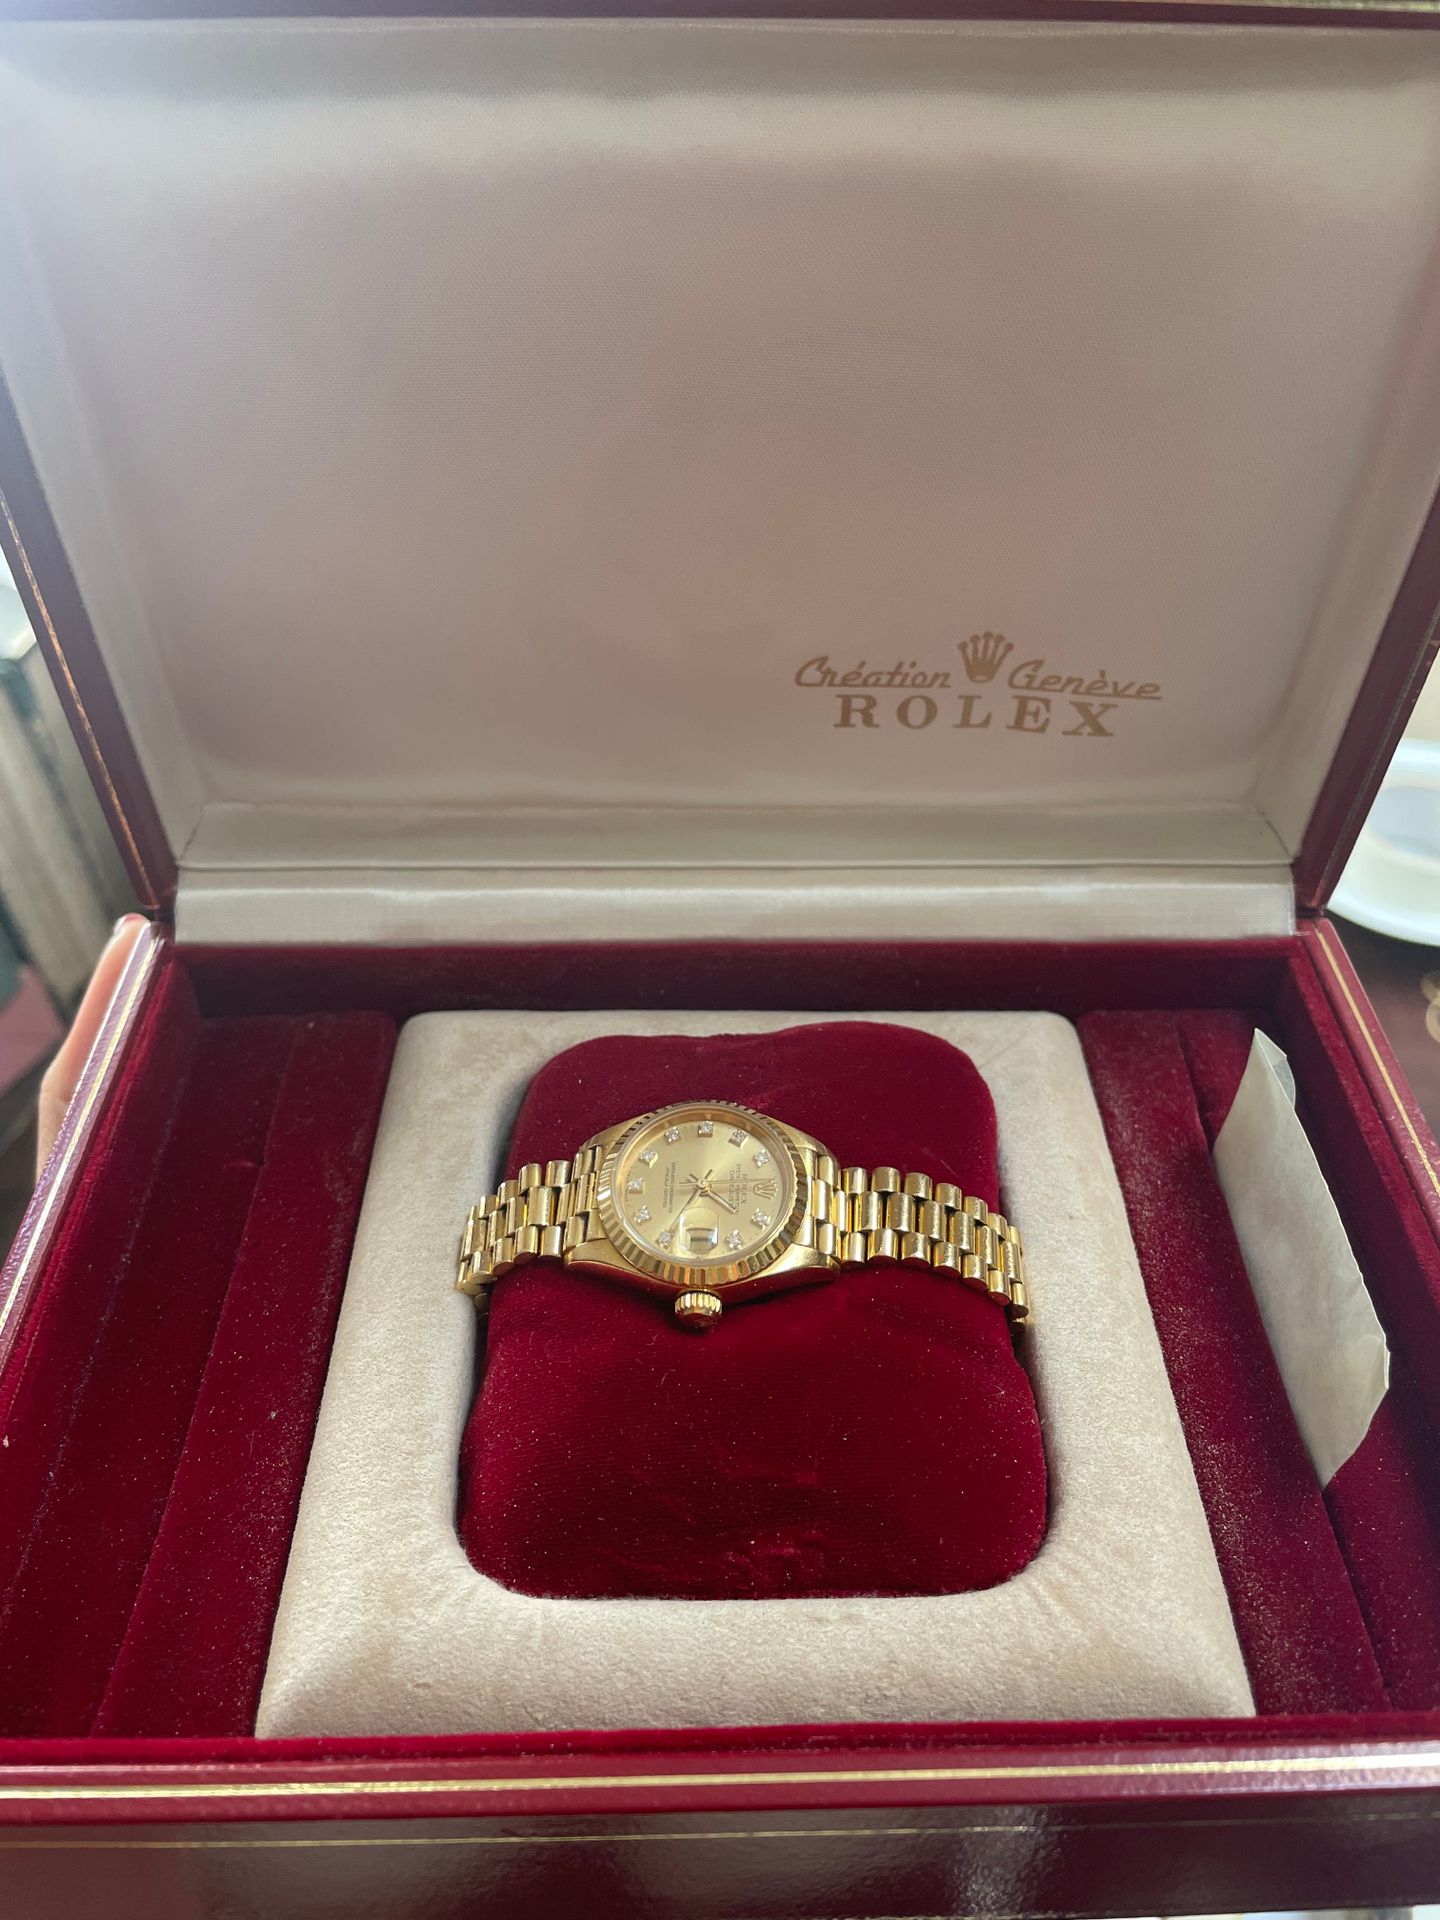 ROLEX Reloj de pulsera de señora Rolex Oyster Perpetual Date Just Lady
Vintage
E&hellip;